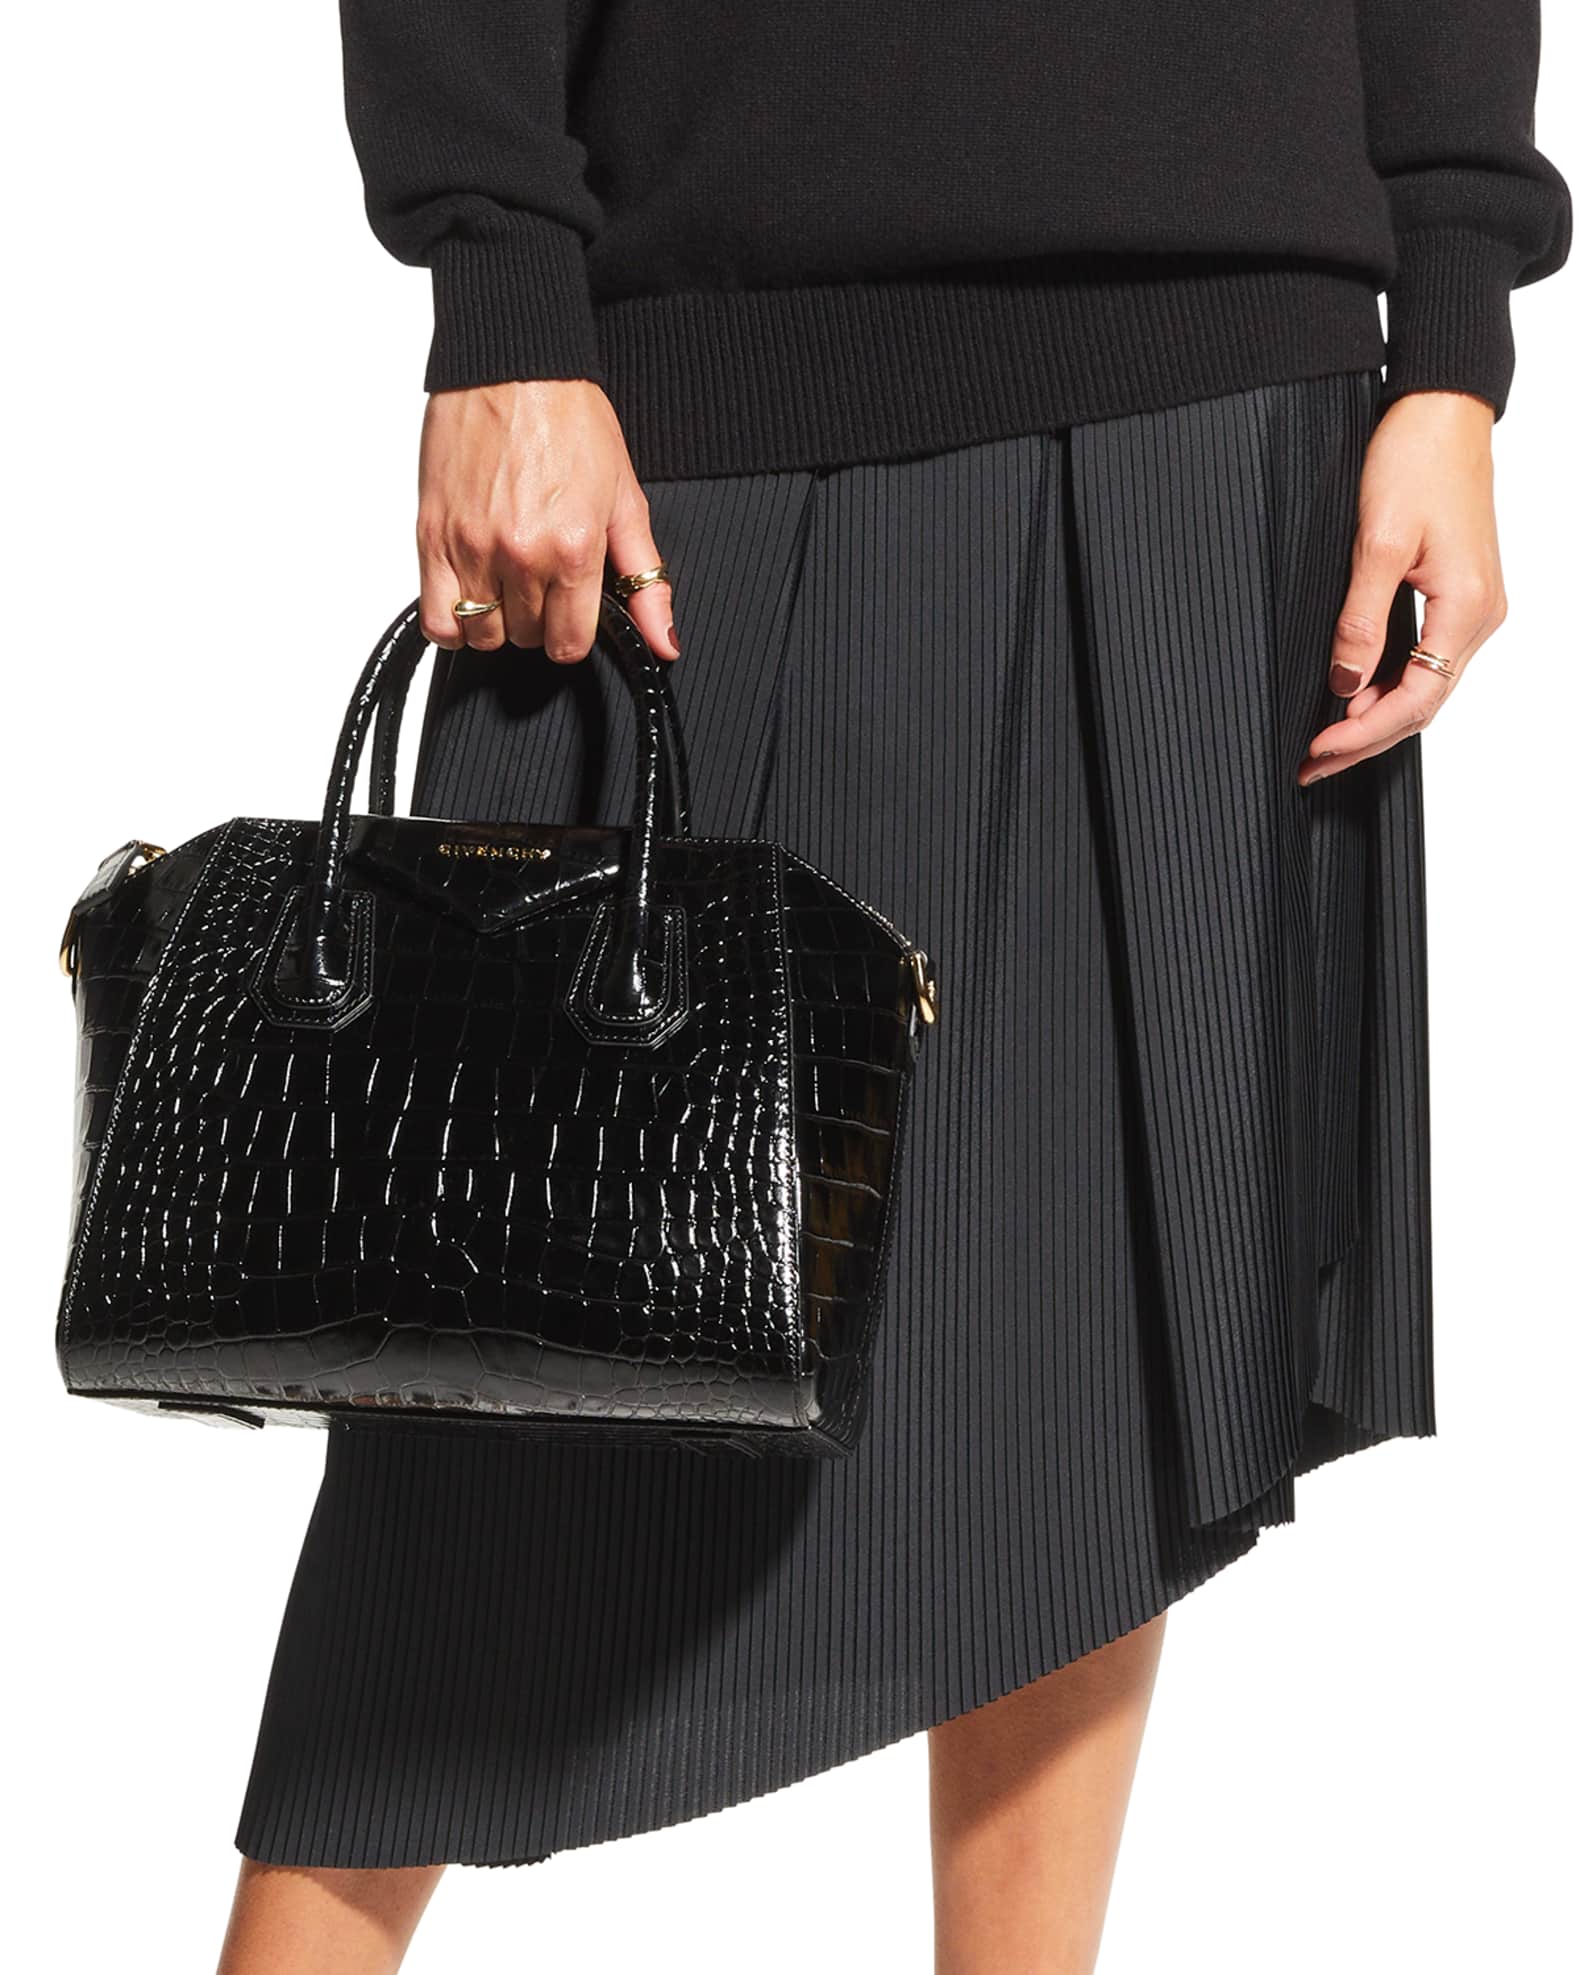 Givenchy Nano Antigona Satchel Bag In Crocodile-embossed Leather